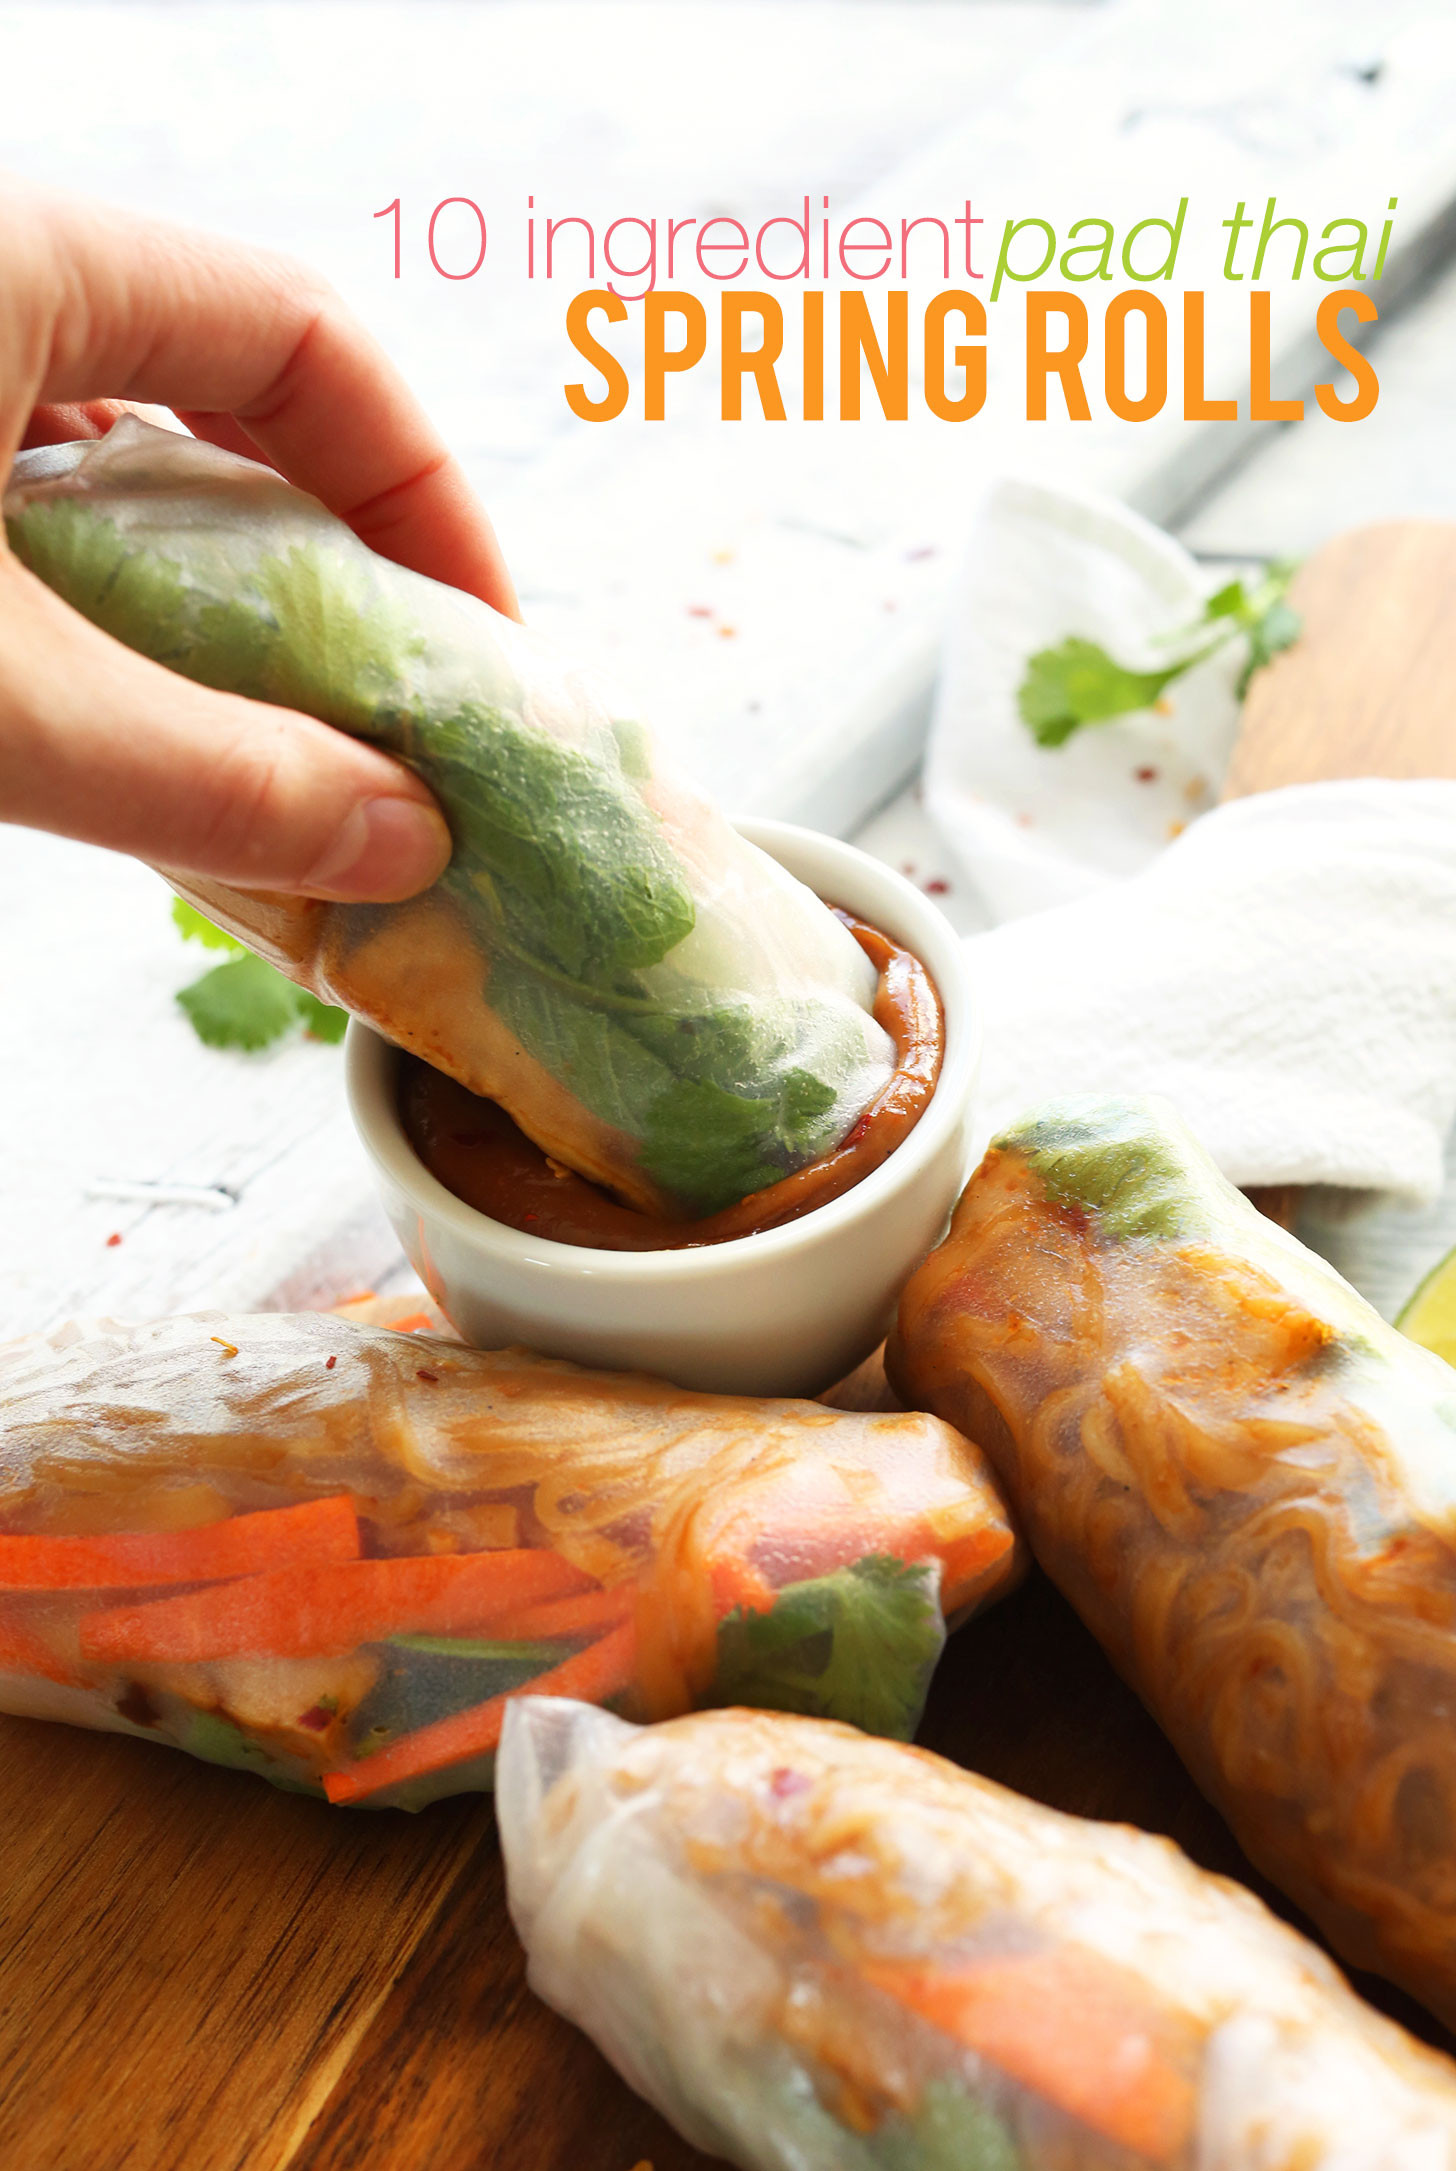 Thai Fresh Spring Rolls Recipes
 Pad Thai Spring Rolls